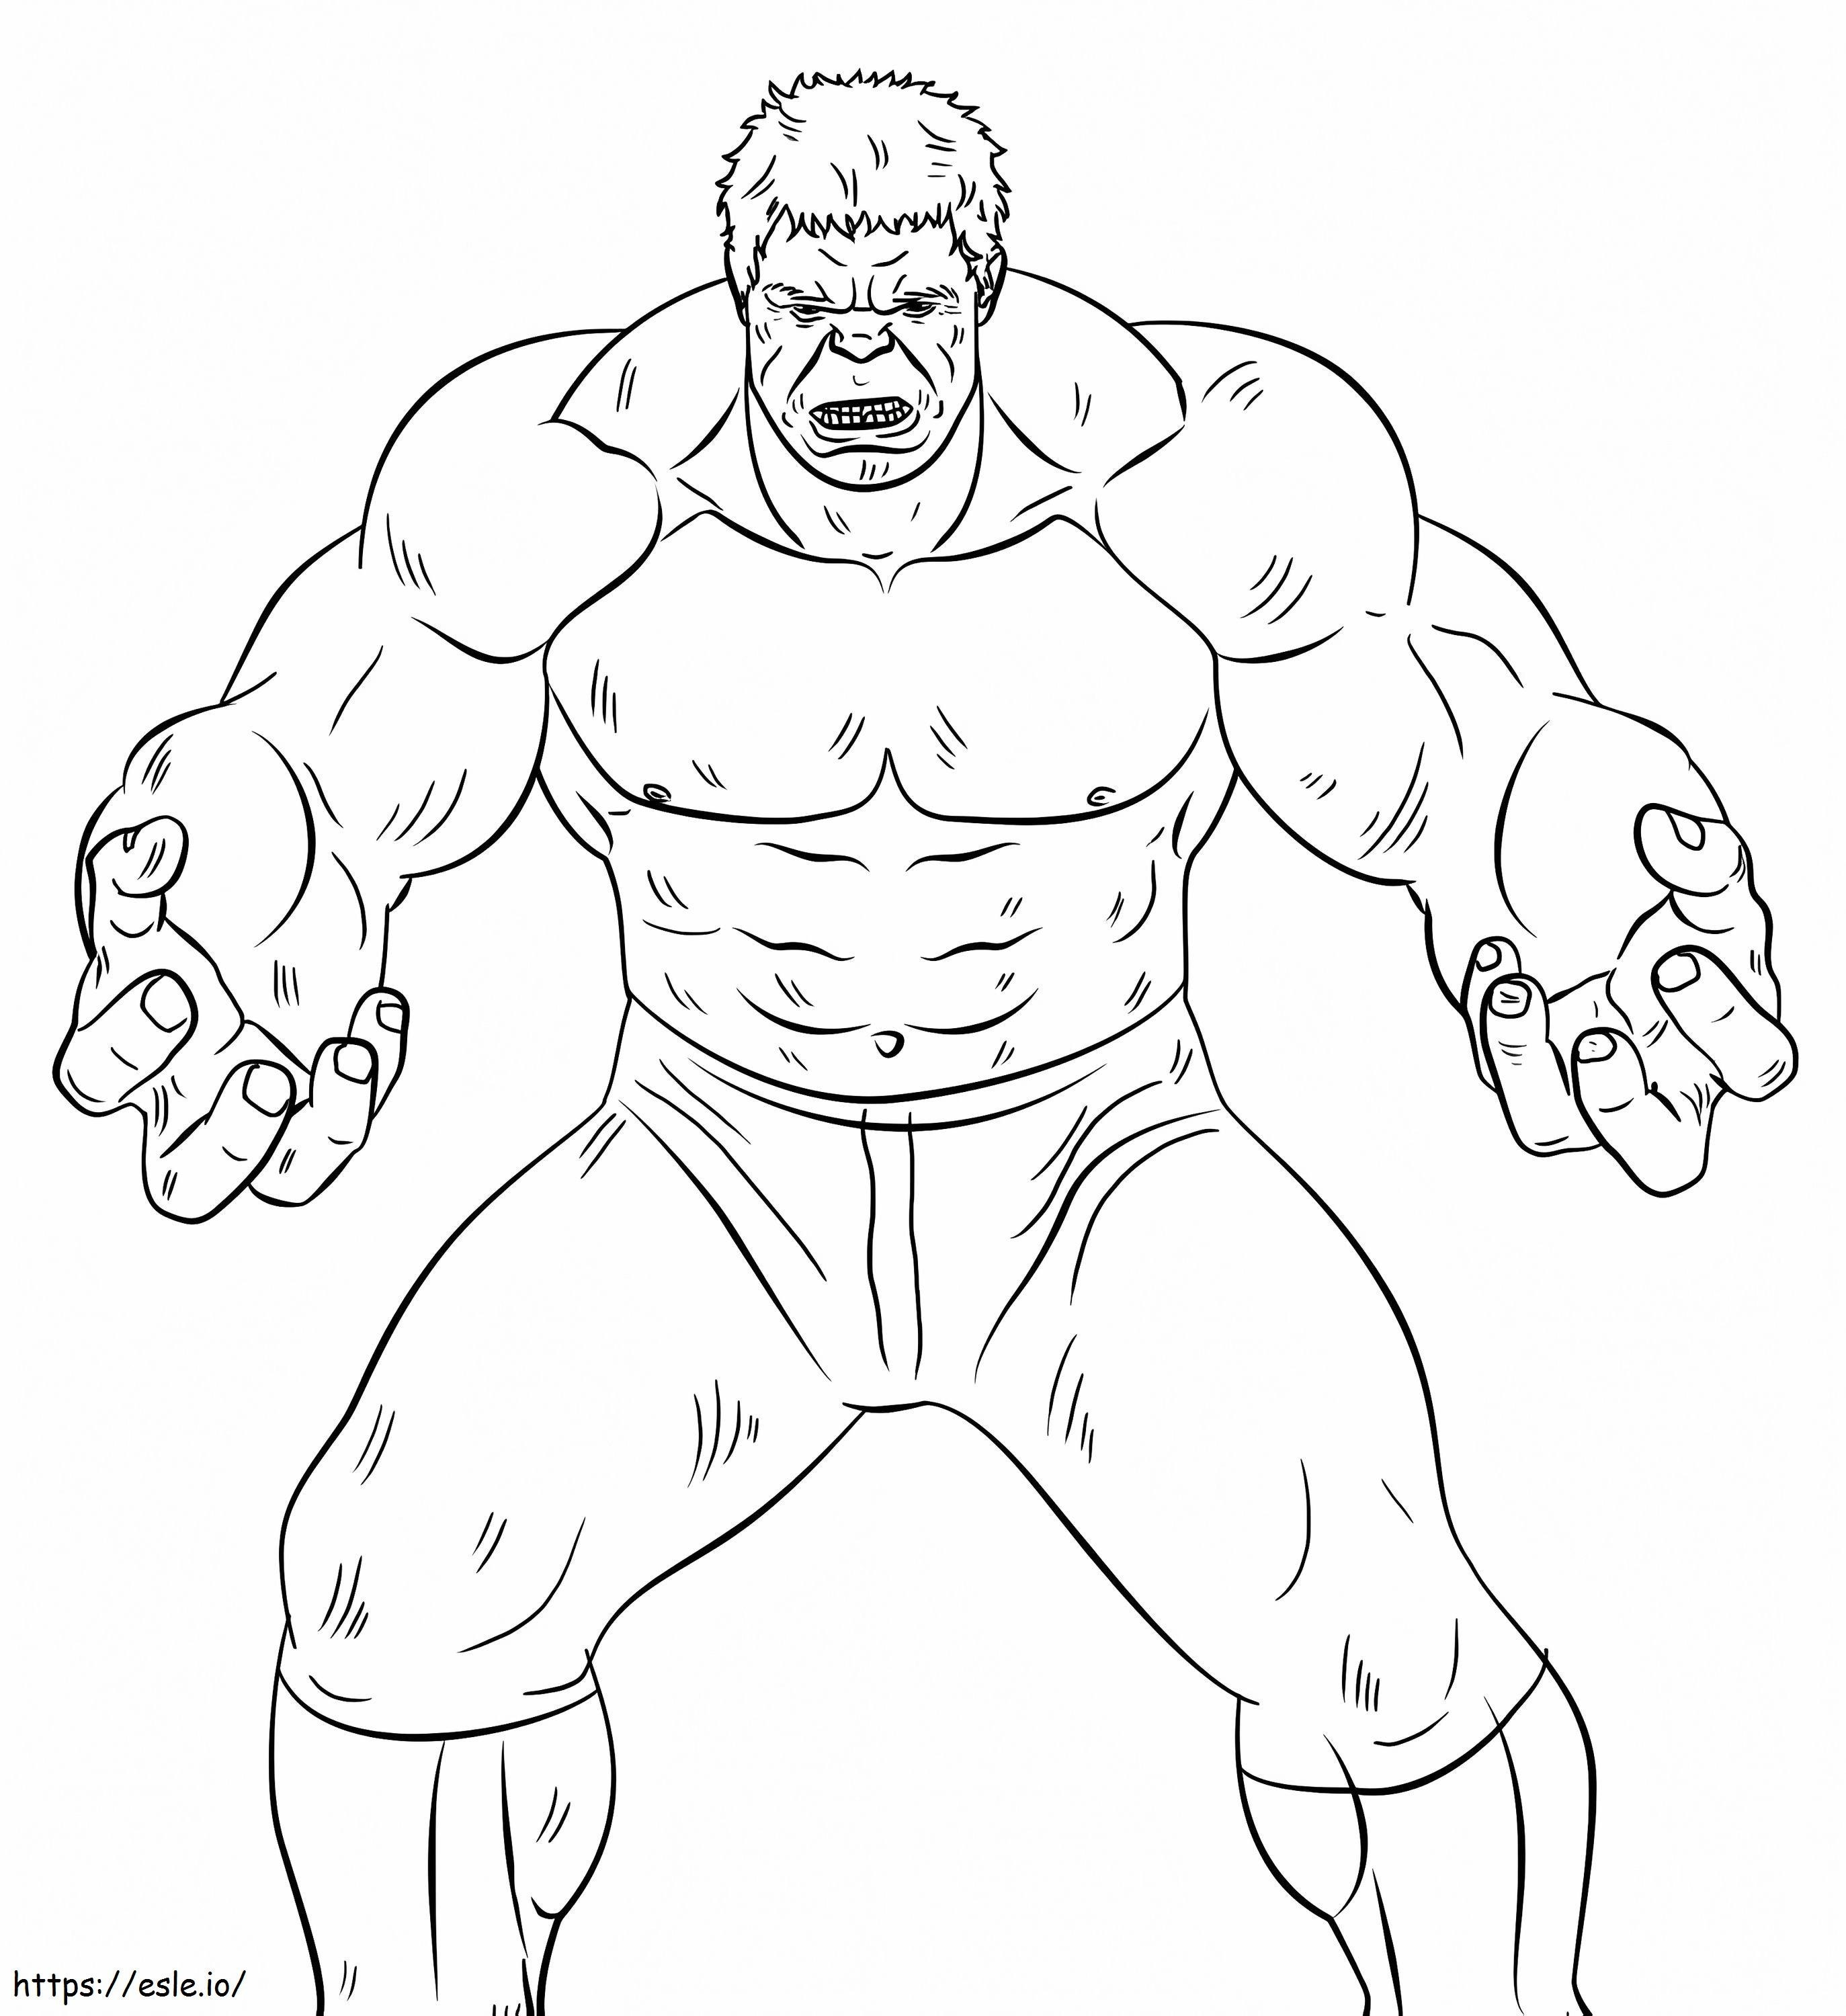 1562293428 Hulk A4 coloring page